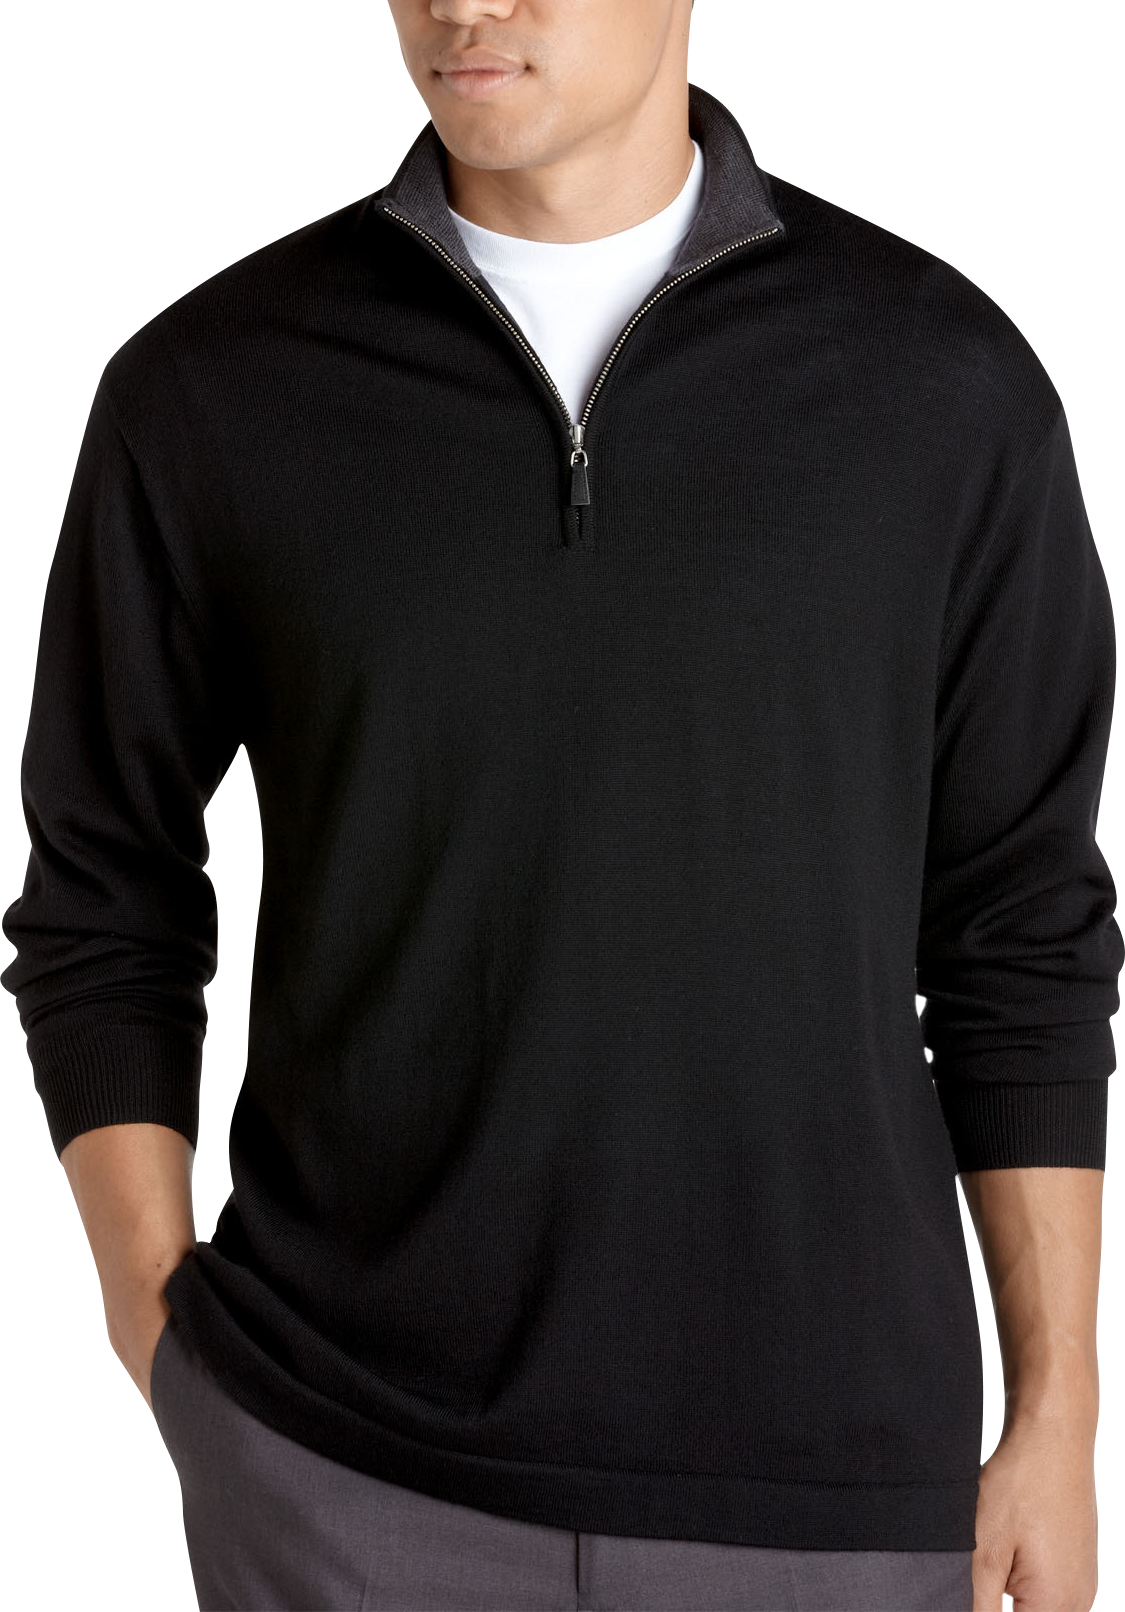 Pronto Uomo Black Merino Half-Zip Sweater - Men's Sweaters | Men's ...